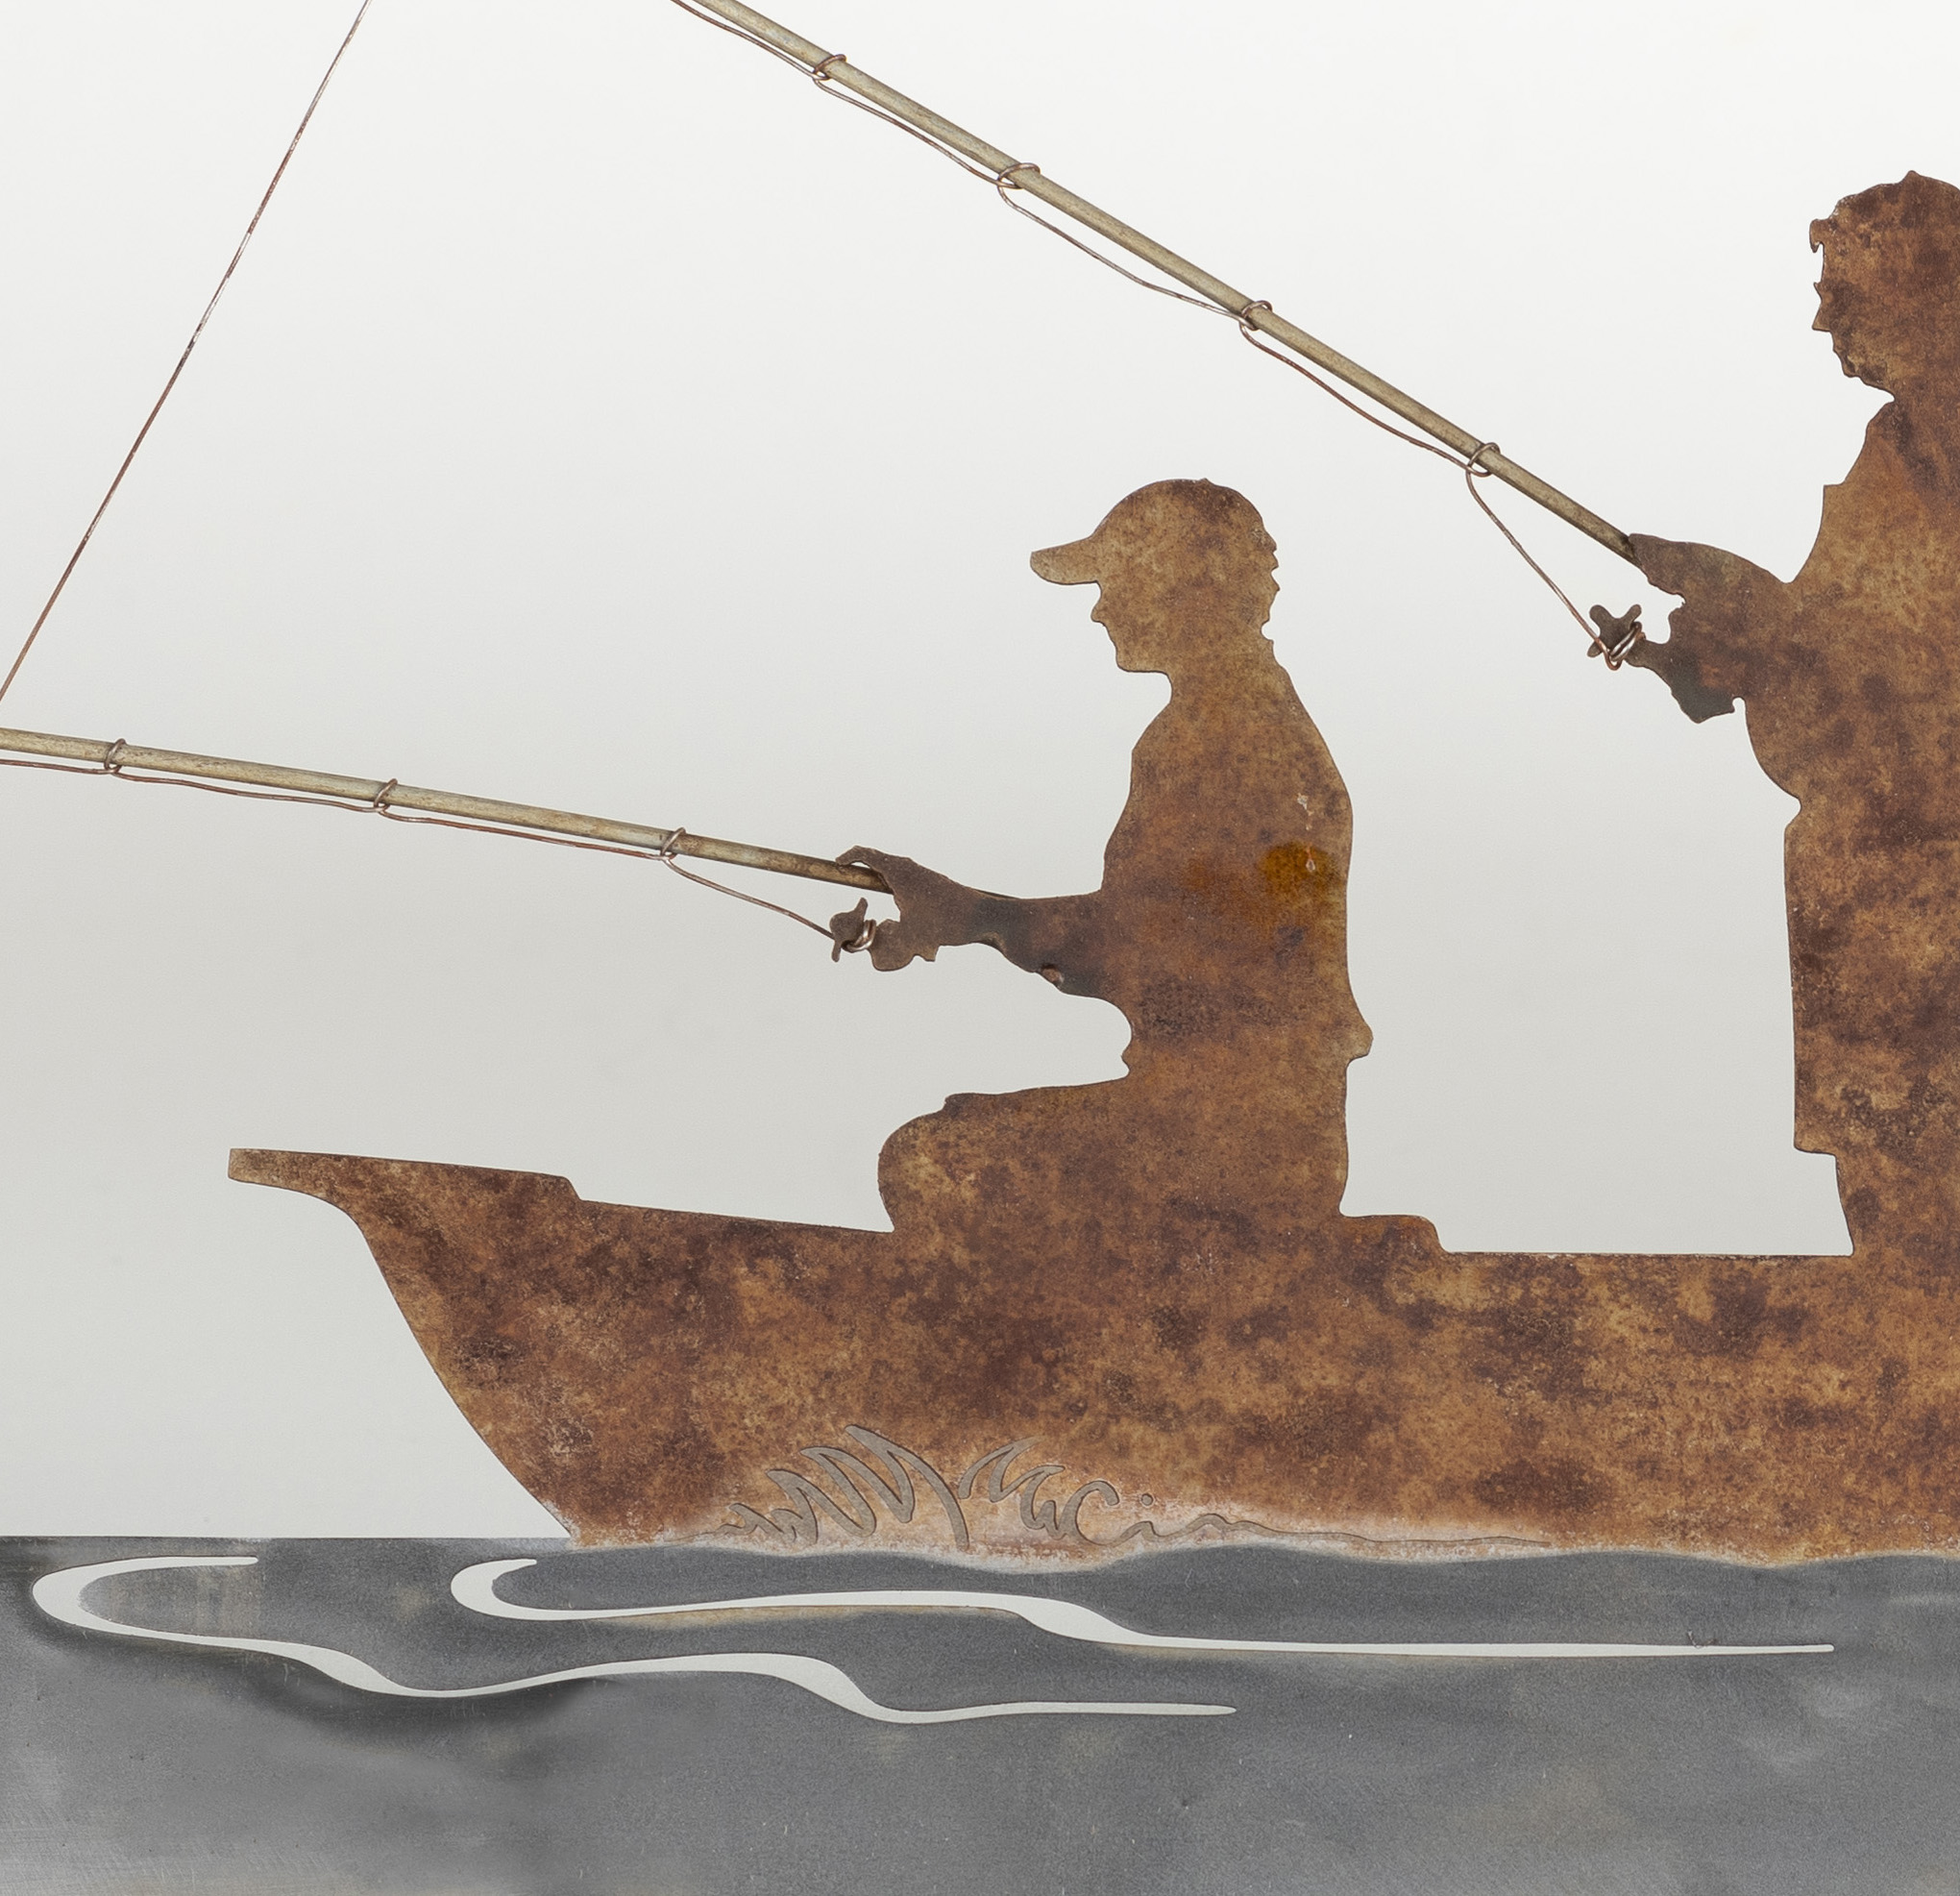 Two Men in Fishing Boat - Metal Saw Wall Art Gift for Fishermen